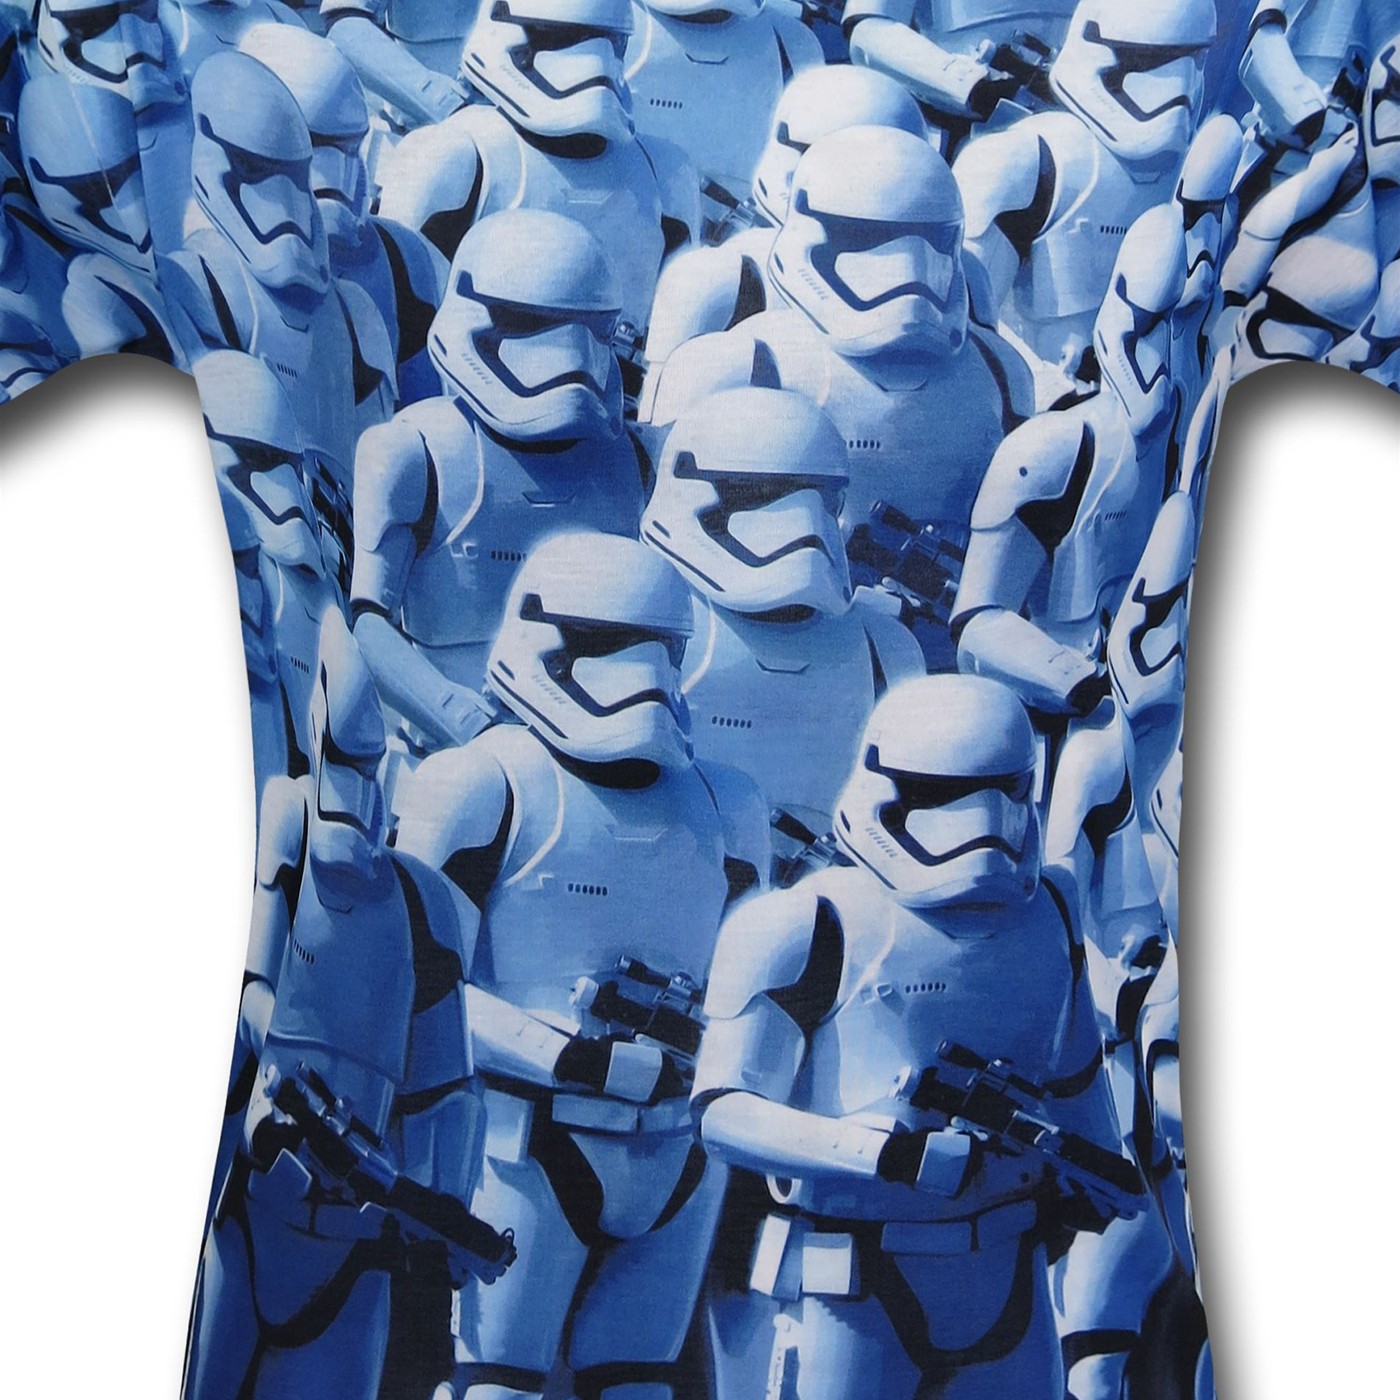 Star Wars Force Awakens Trooper Sublimated T-Shirt